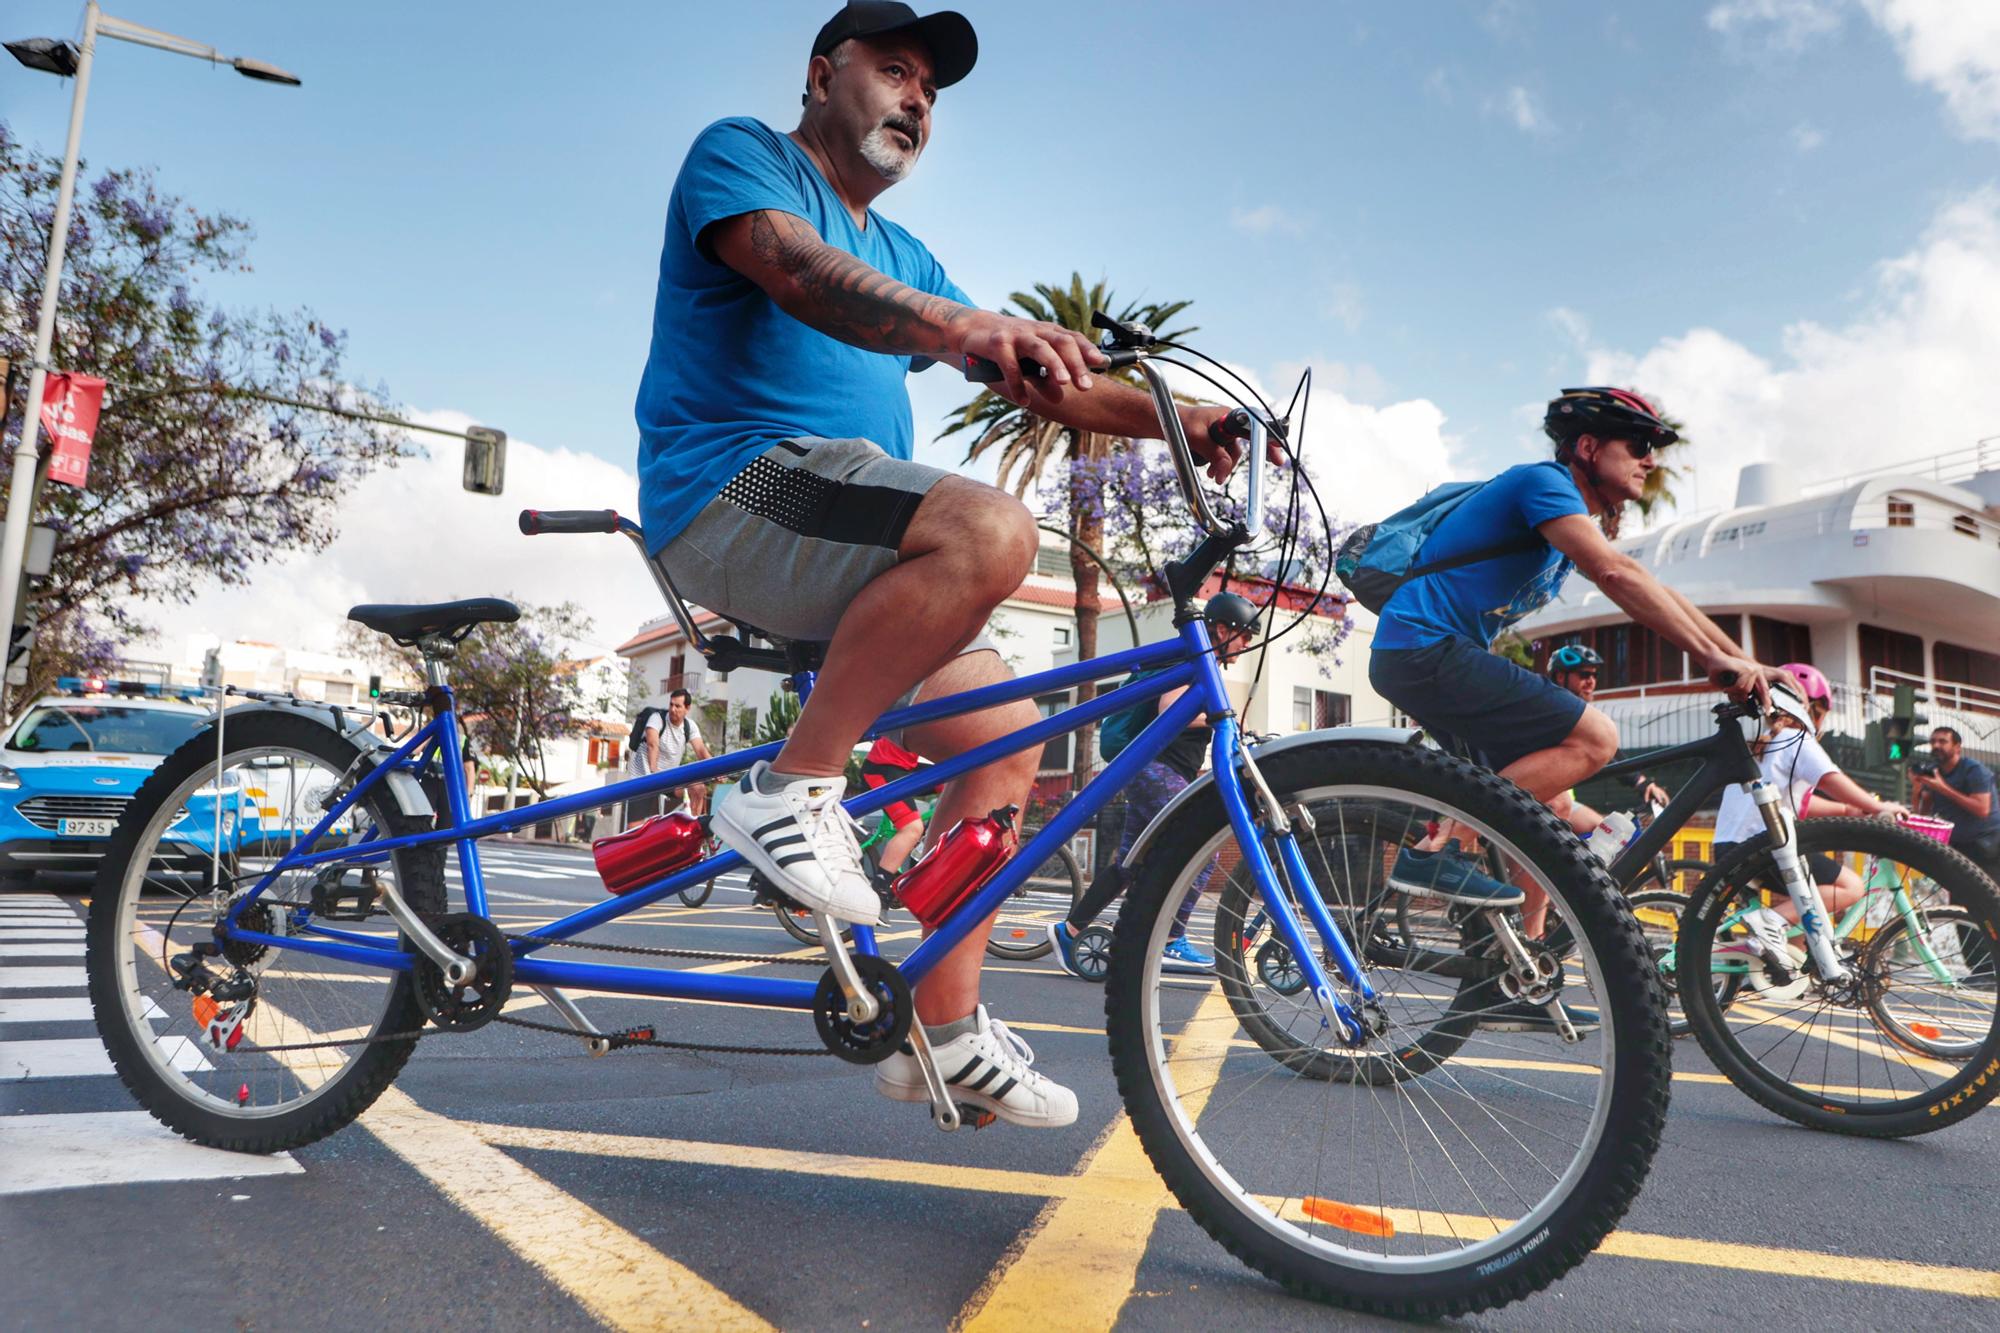 Fiesta de la bicicleta en Santa Cruz de Tenerife